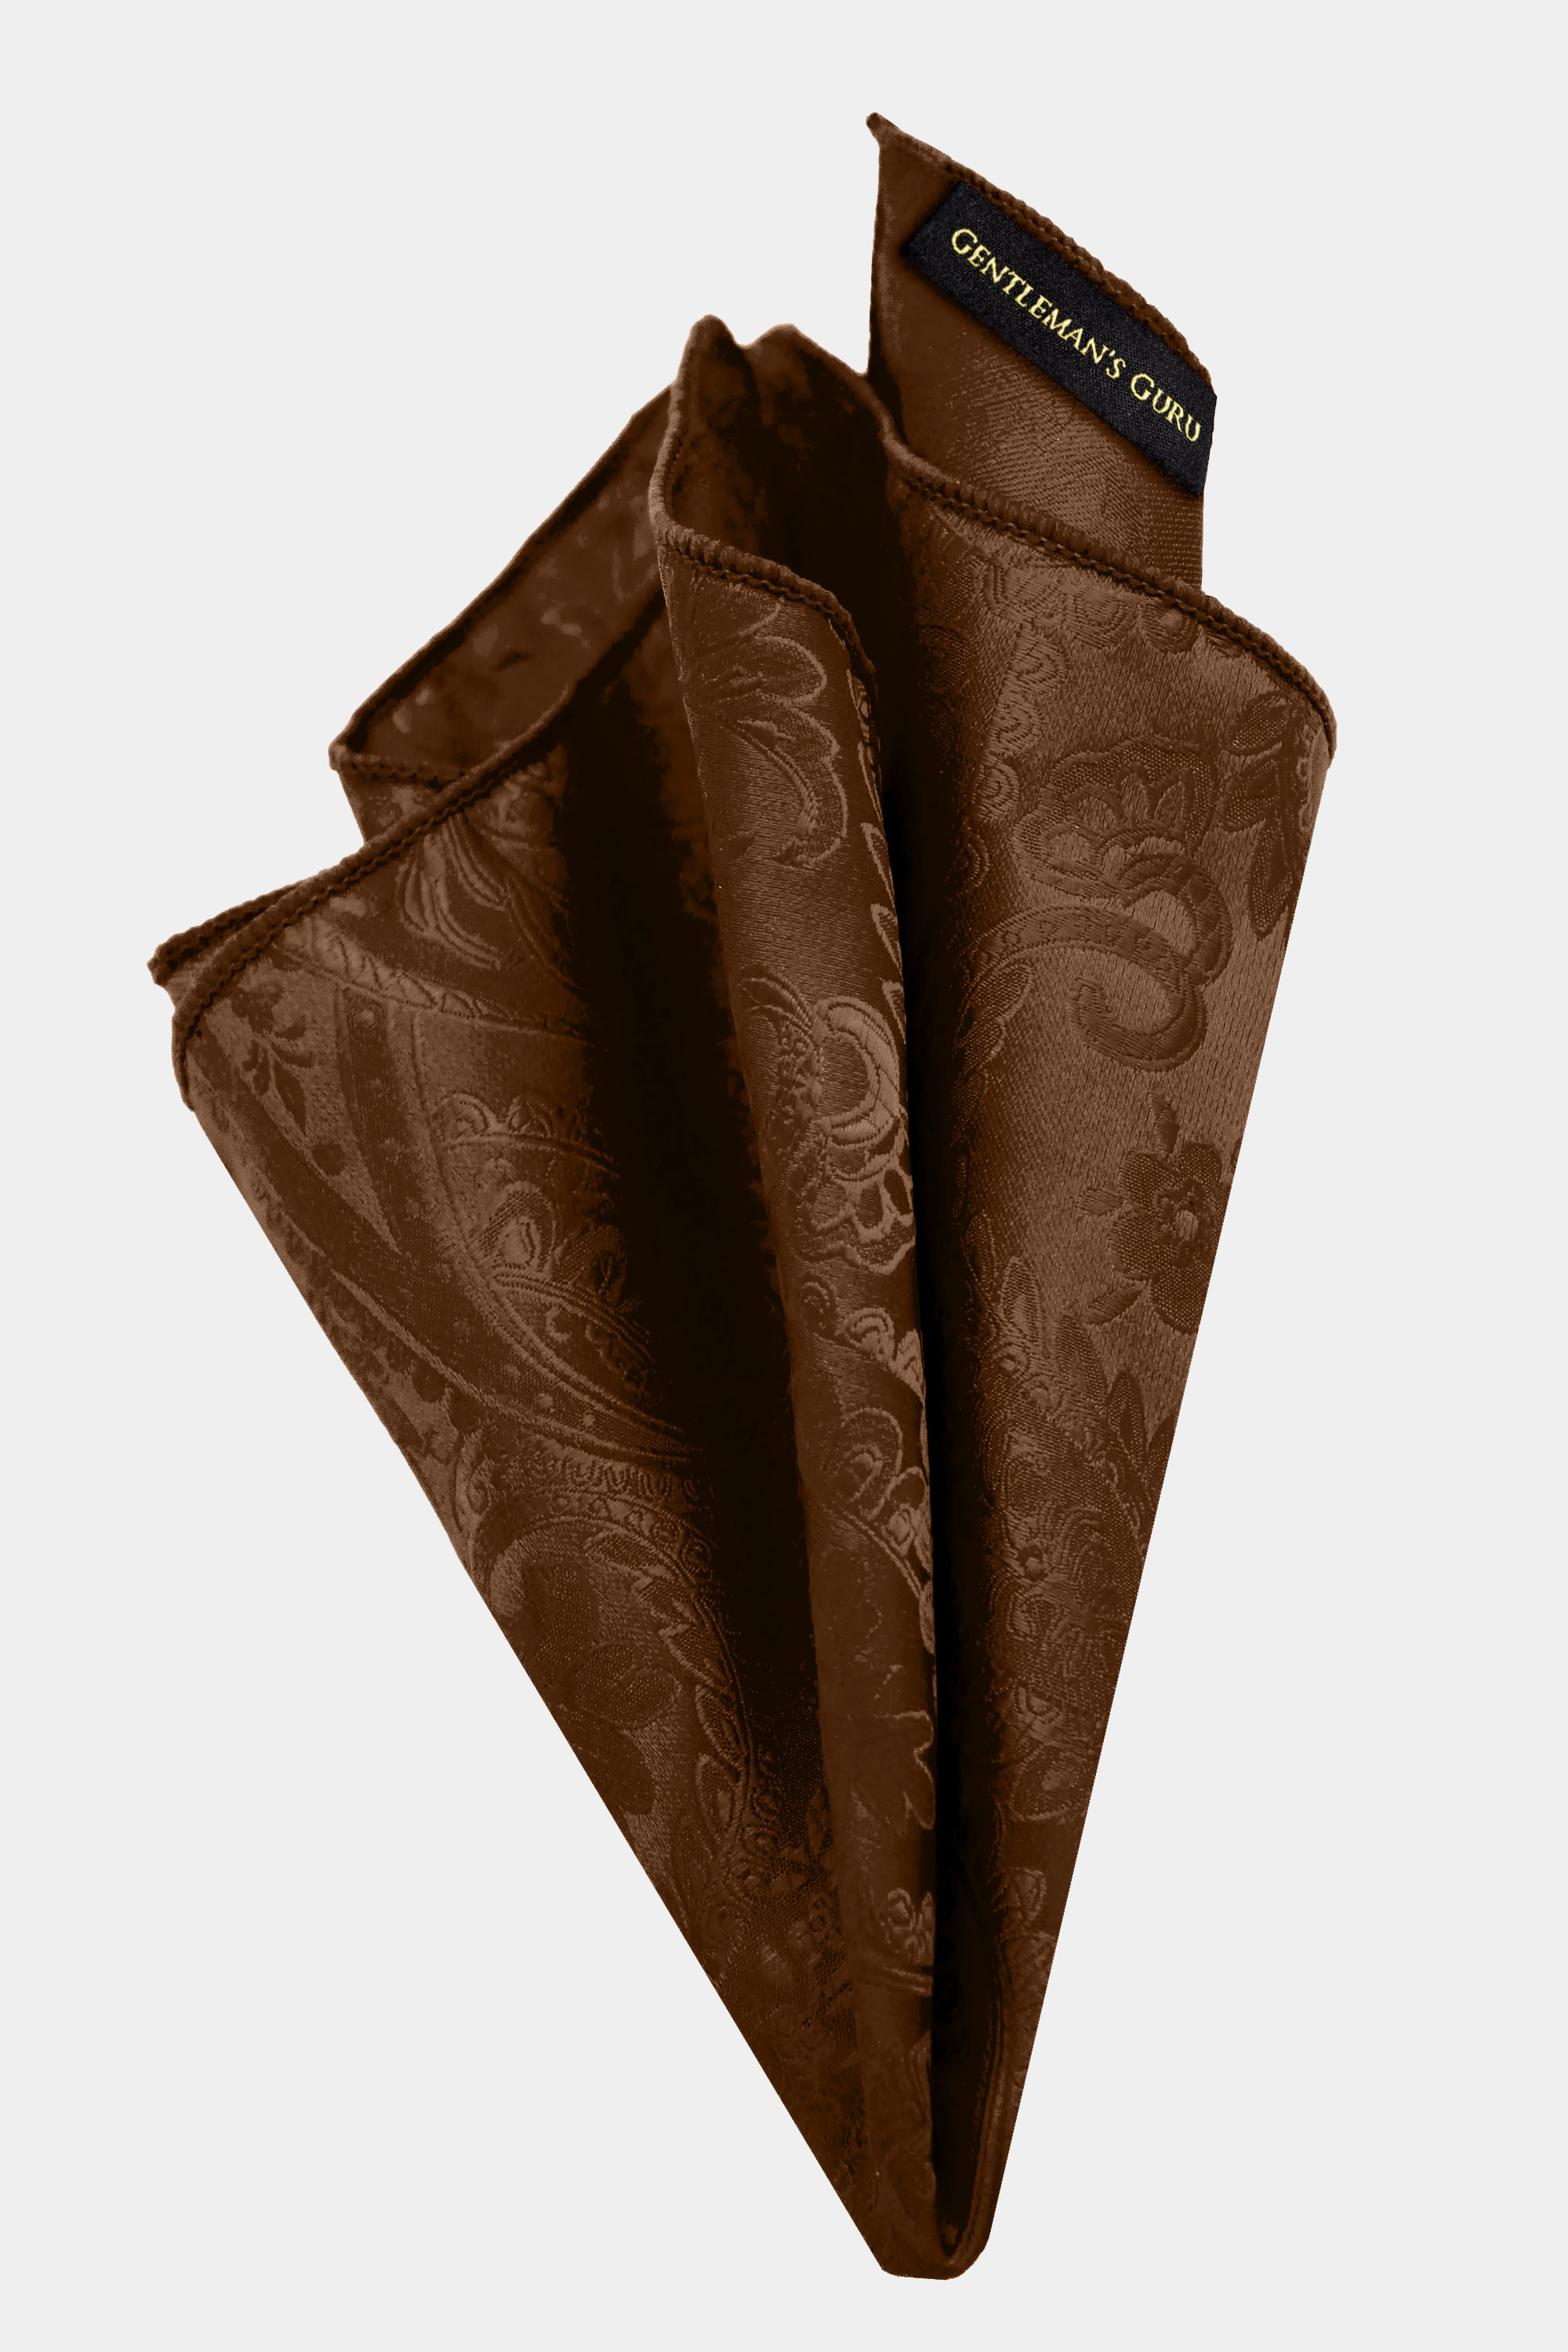 Brown-Paisley-Pocket-Square-Handkerchief-from-Gentlemansguru.com